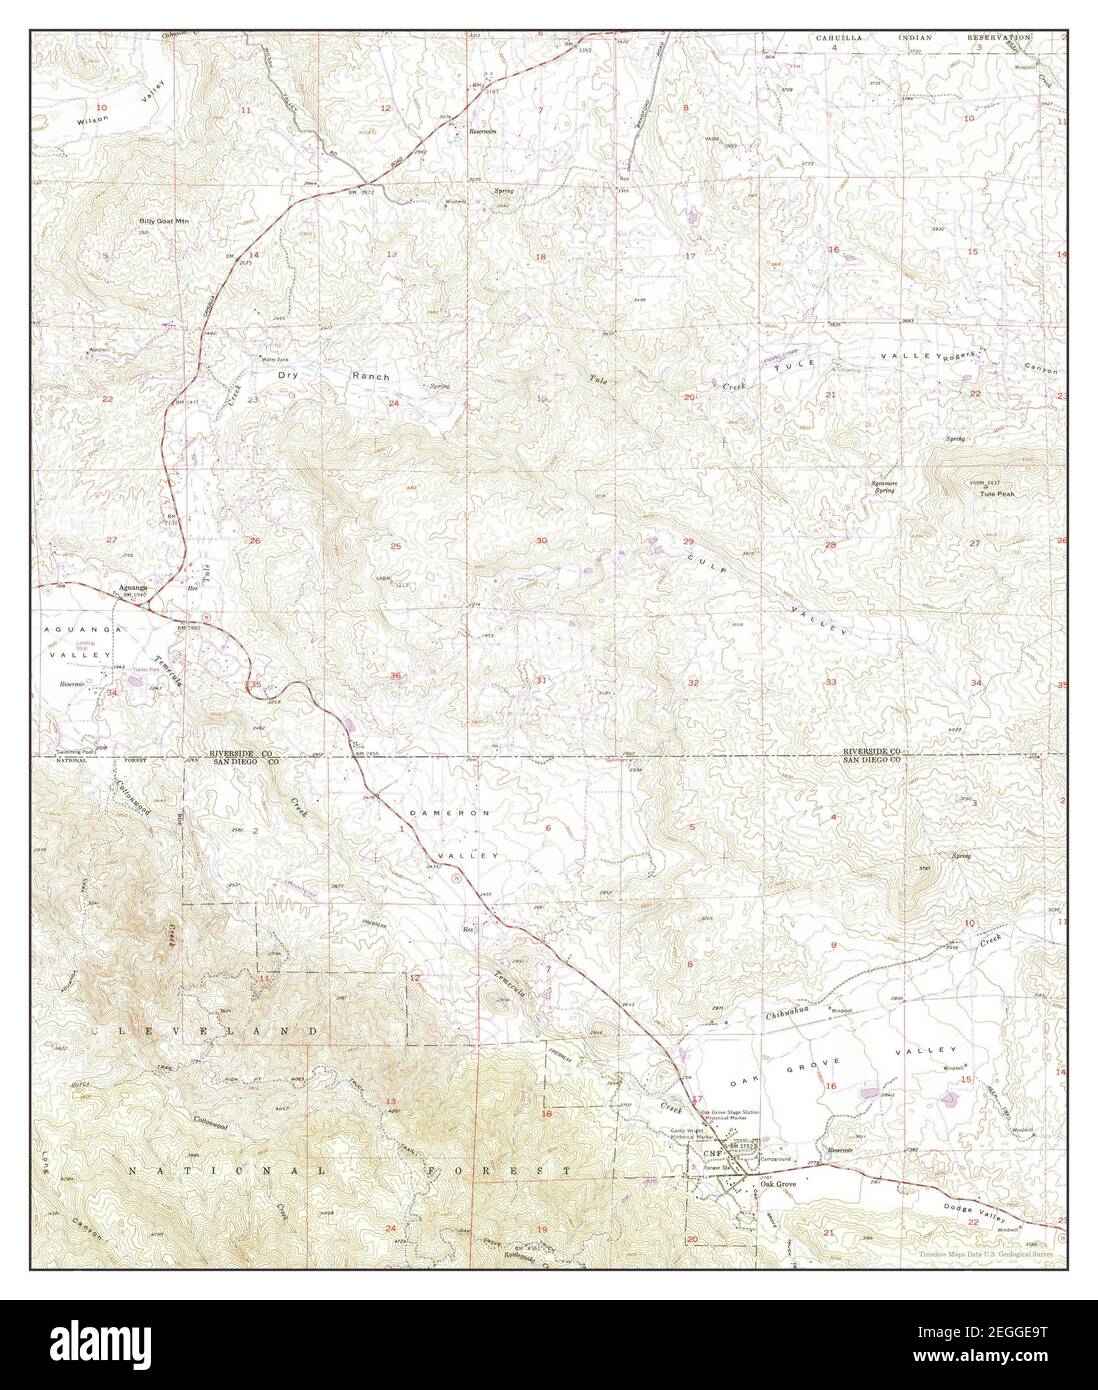 Aguanga, California, map 1954, 1:24000, United States of America by Timeless Maps, data U.S. Geological Survey Stock Photo